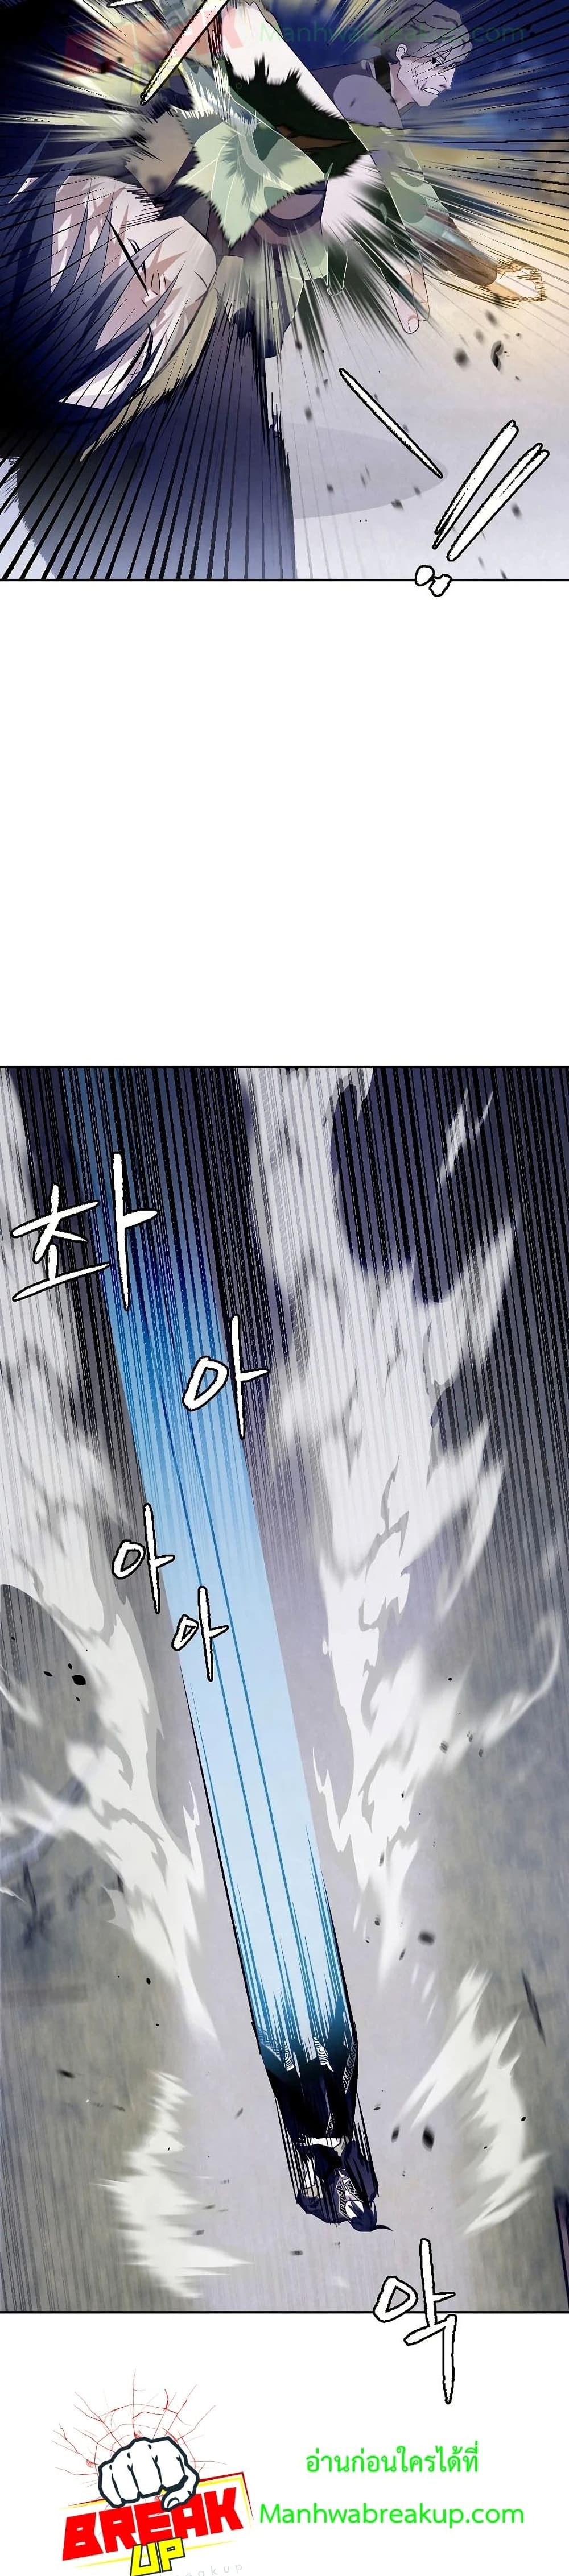 Heavenly Sword’s Grand Saga 17-17